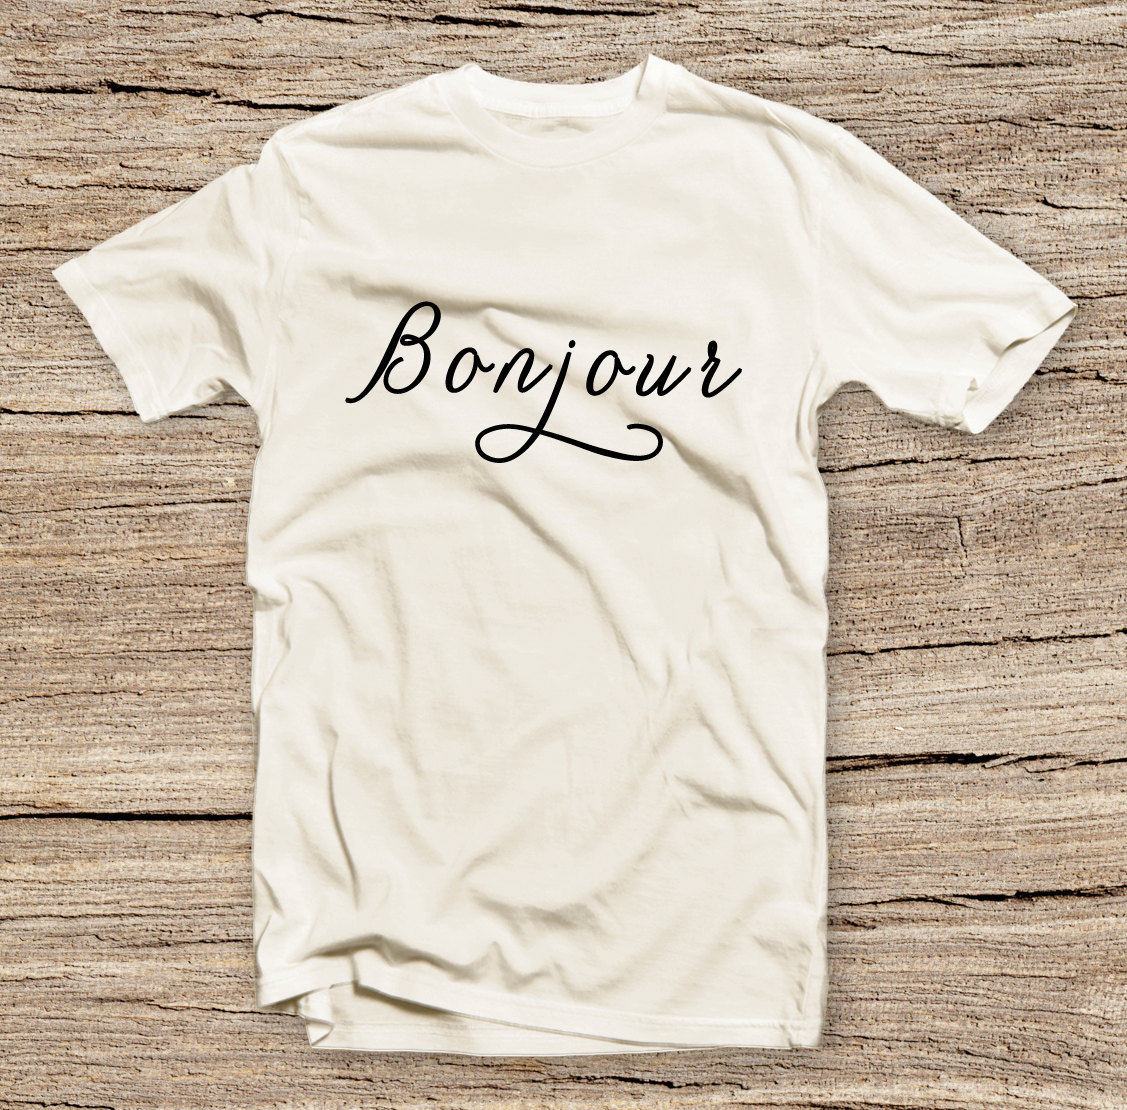 Pts-136 Bonjour T-shirts, Fashion Shirts, Cute T-shirt, Cool T-shirts